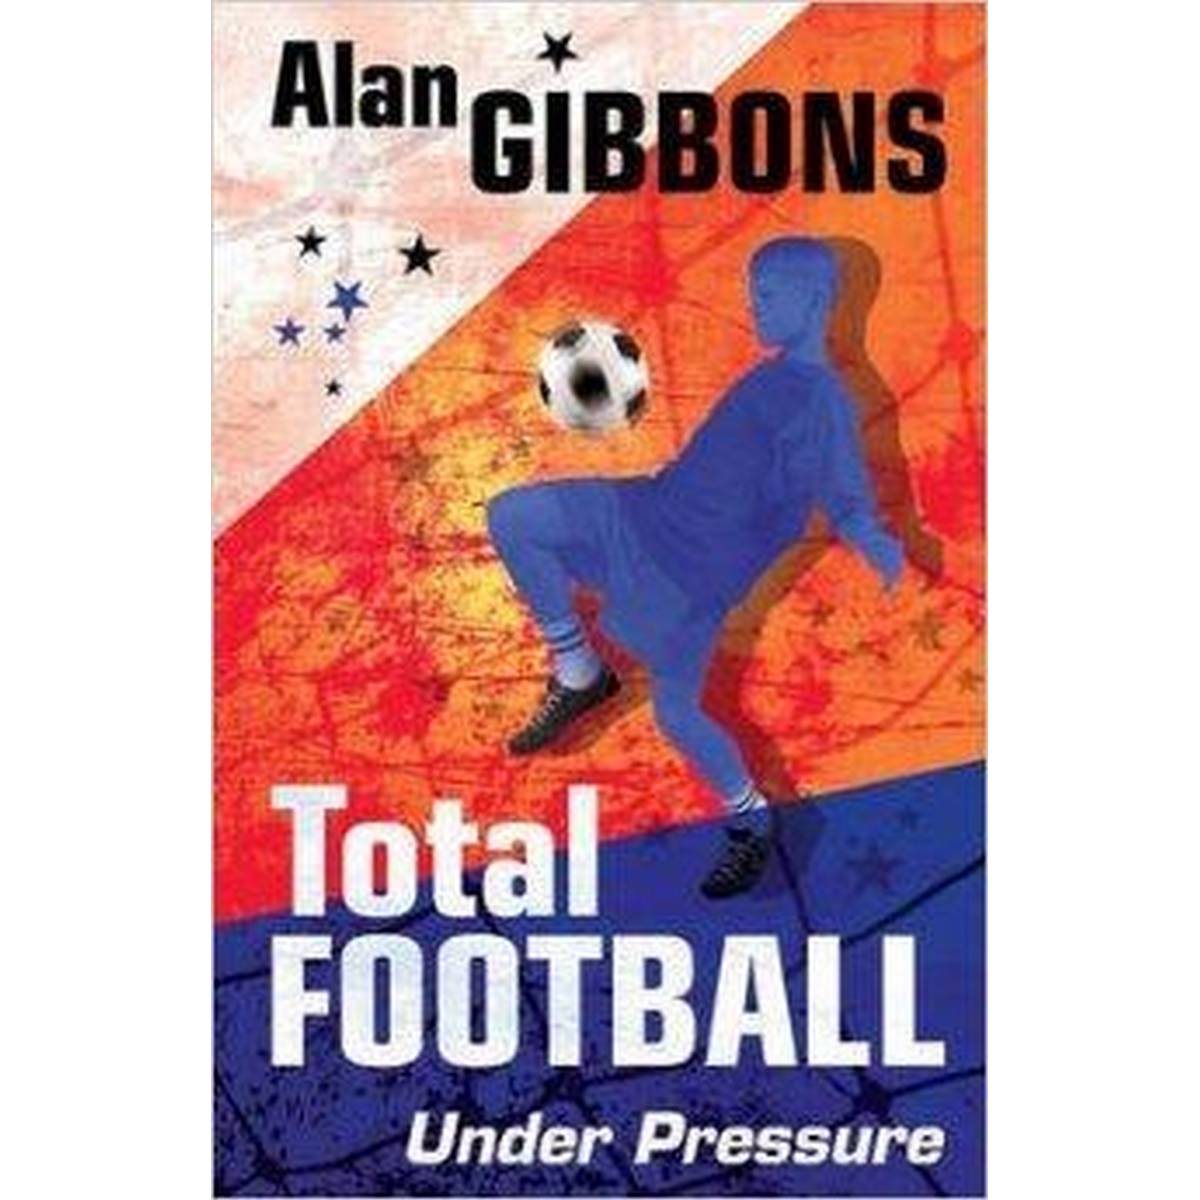 Total football: Under pressure 2